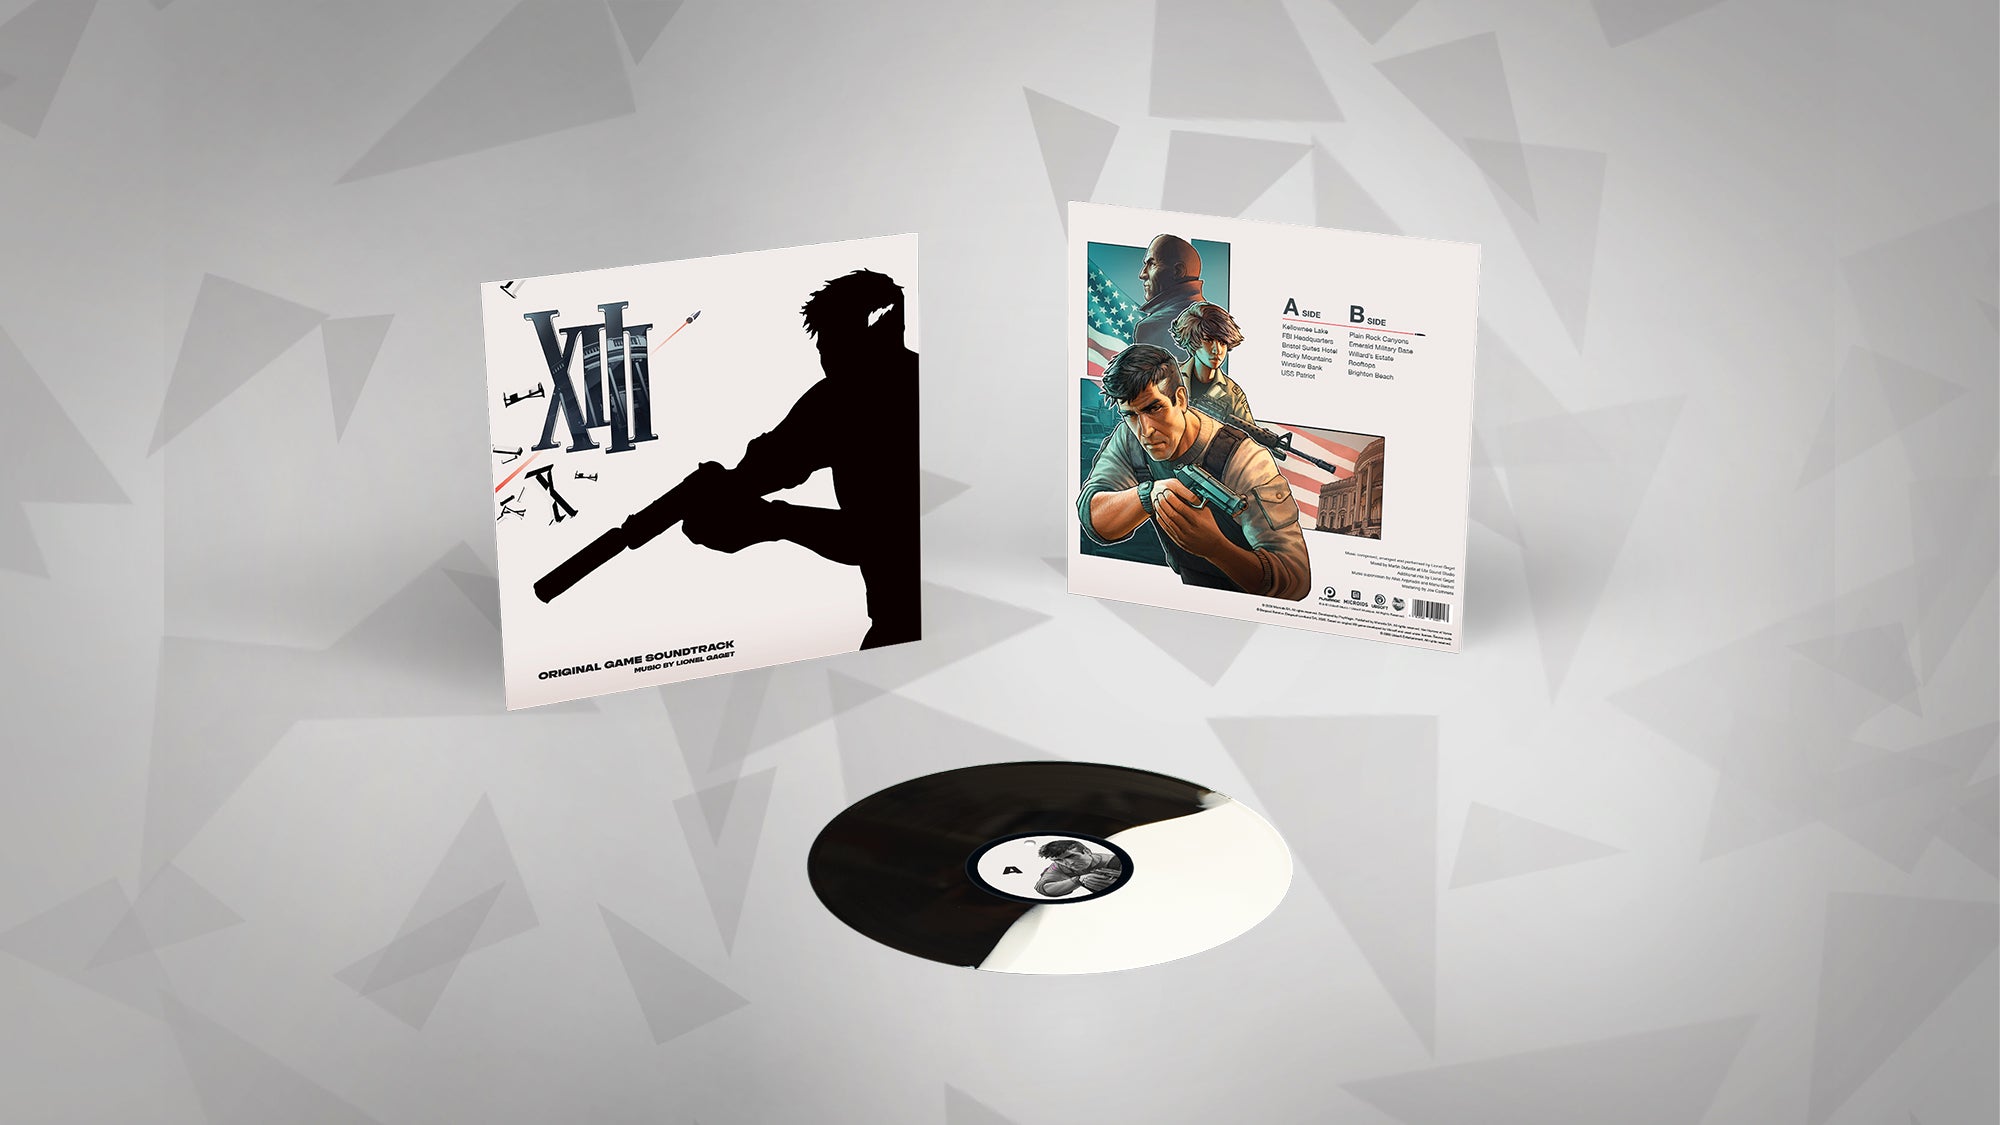 XIII vinyl soundtrack